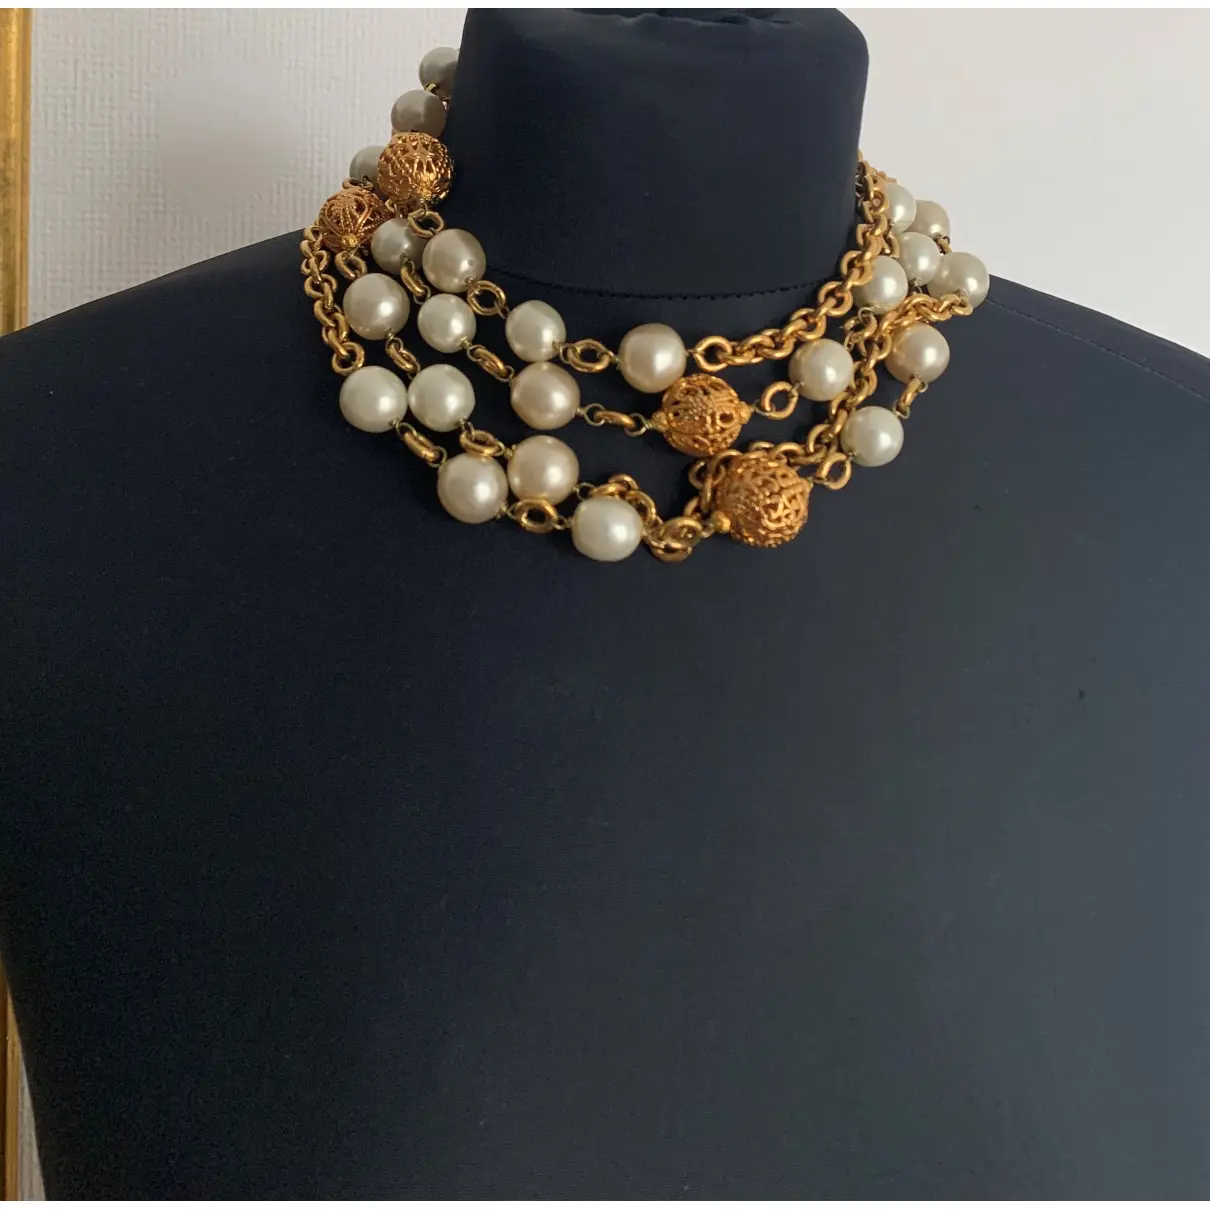 Buy Chanel Baroque long necklace online - Vintage